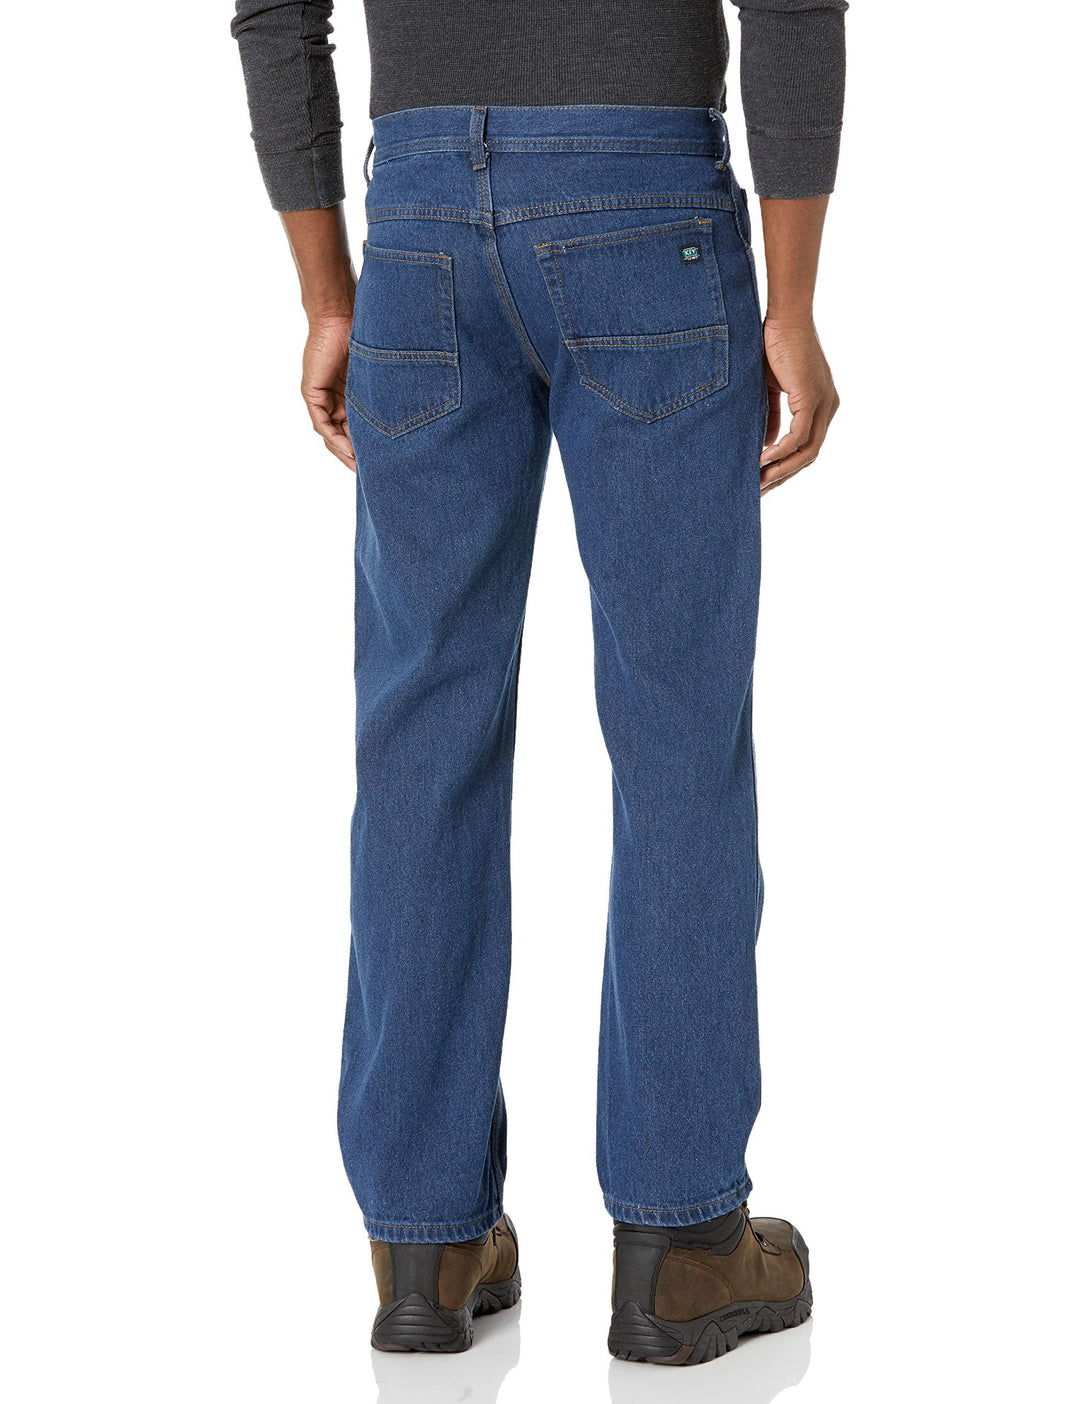 Key Apparel Men's Performance Comfort 5-Pocket Jean, Indigo, 32W x 30L